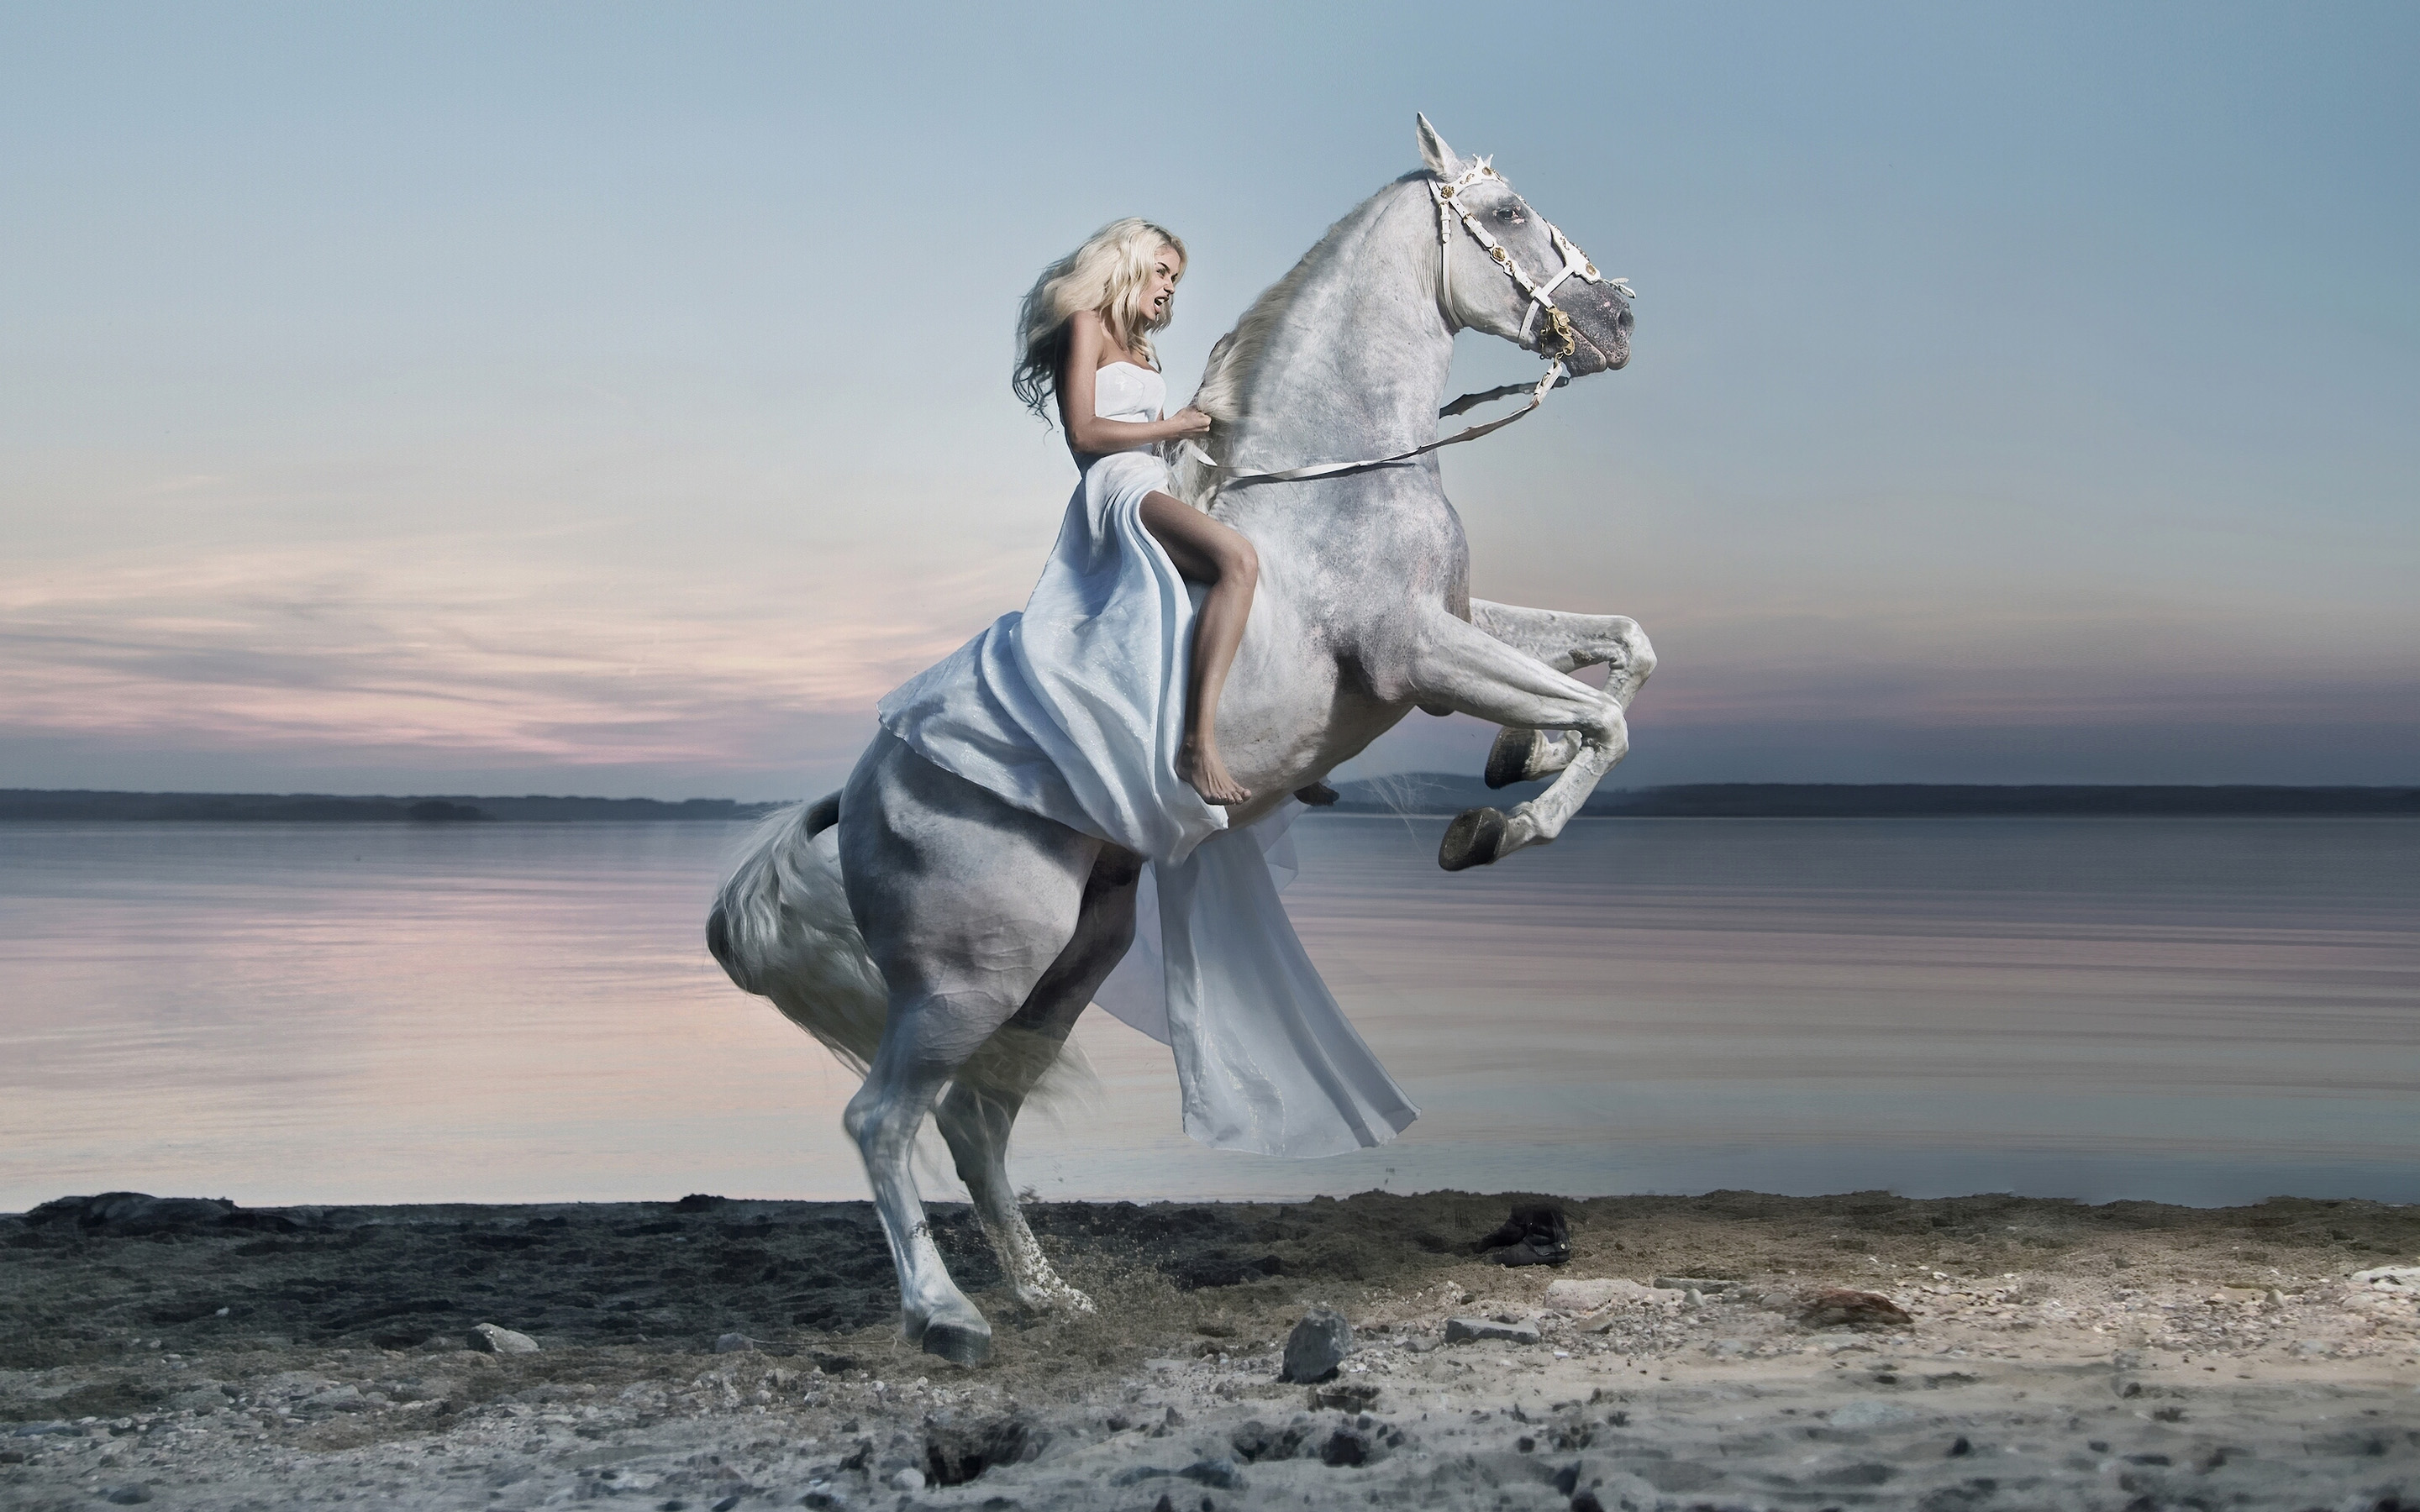 Blue Girl On A White Horse Lake Hd Desktop Wallpaper : Wallpapers13.com